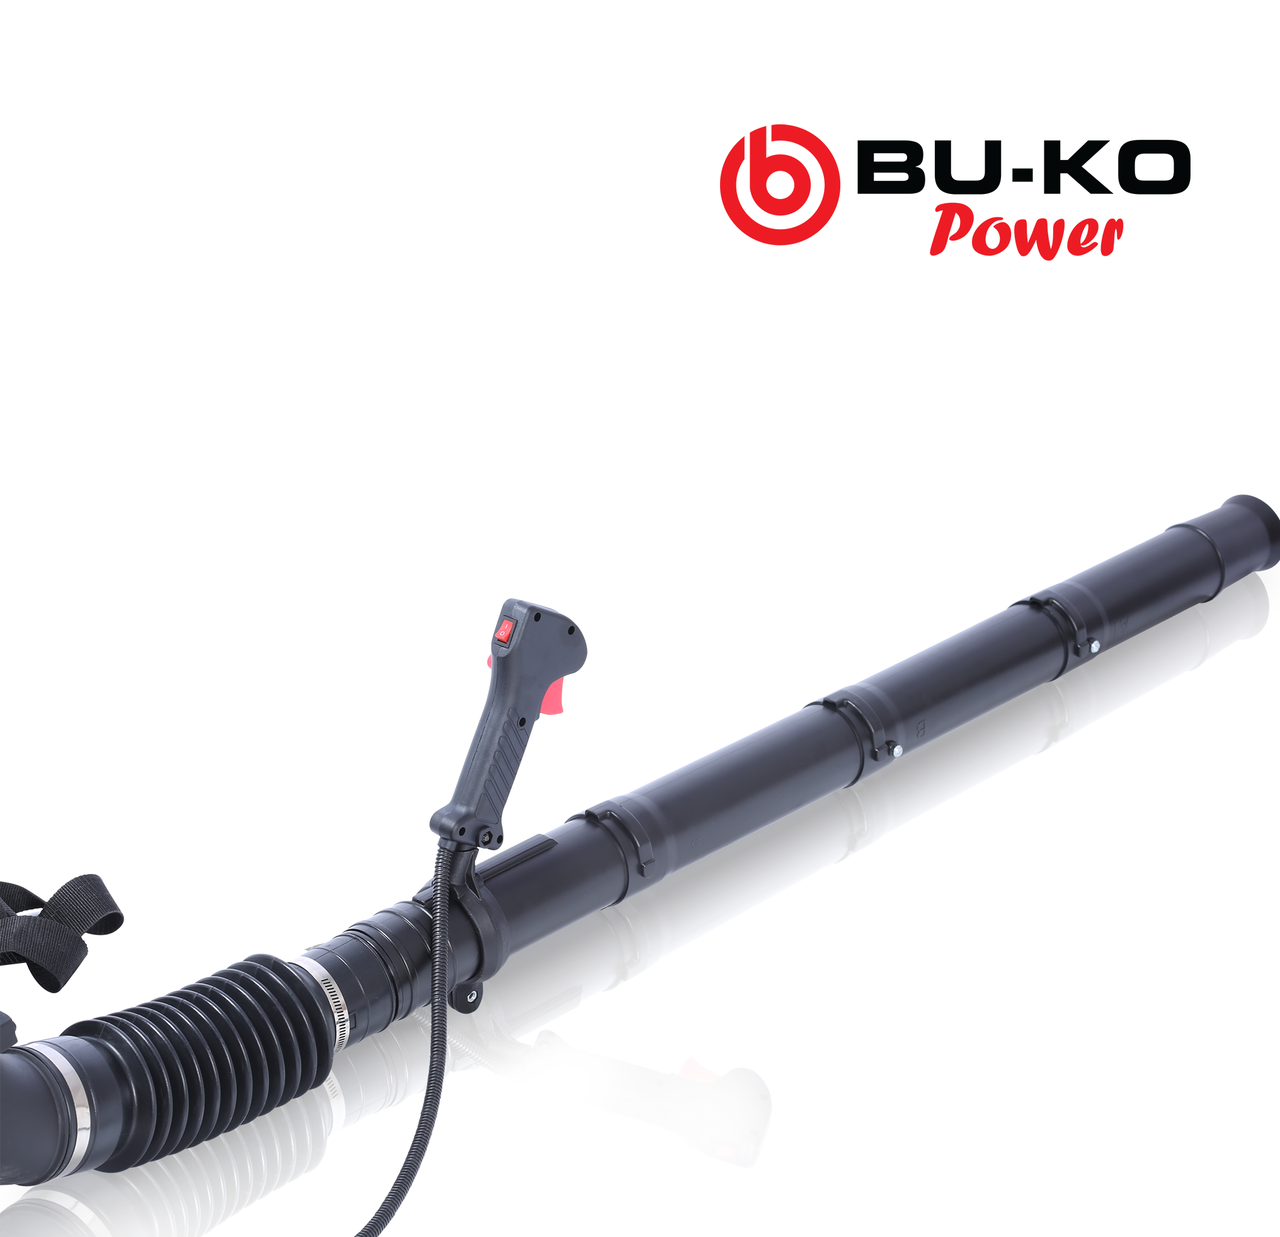 Light Weight BU-KO 52CC Petrol Backpack Leaf Blower – Powerful 2 Stroke Air Cooled Engine